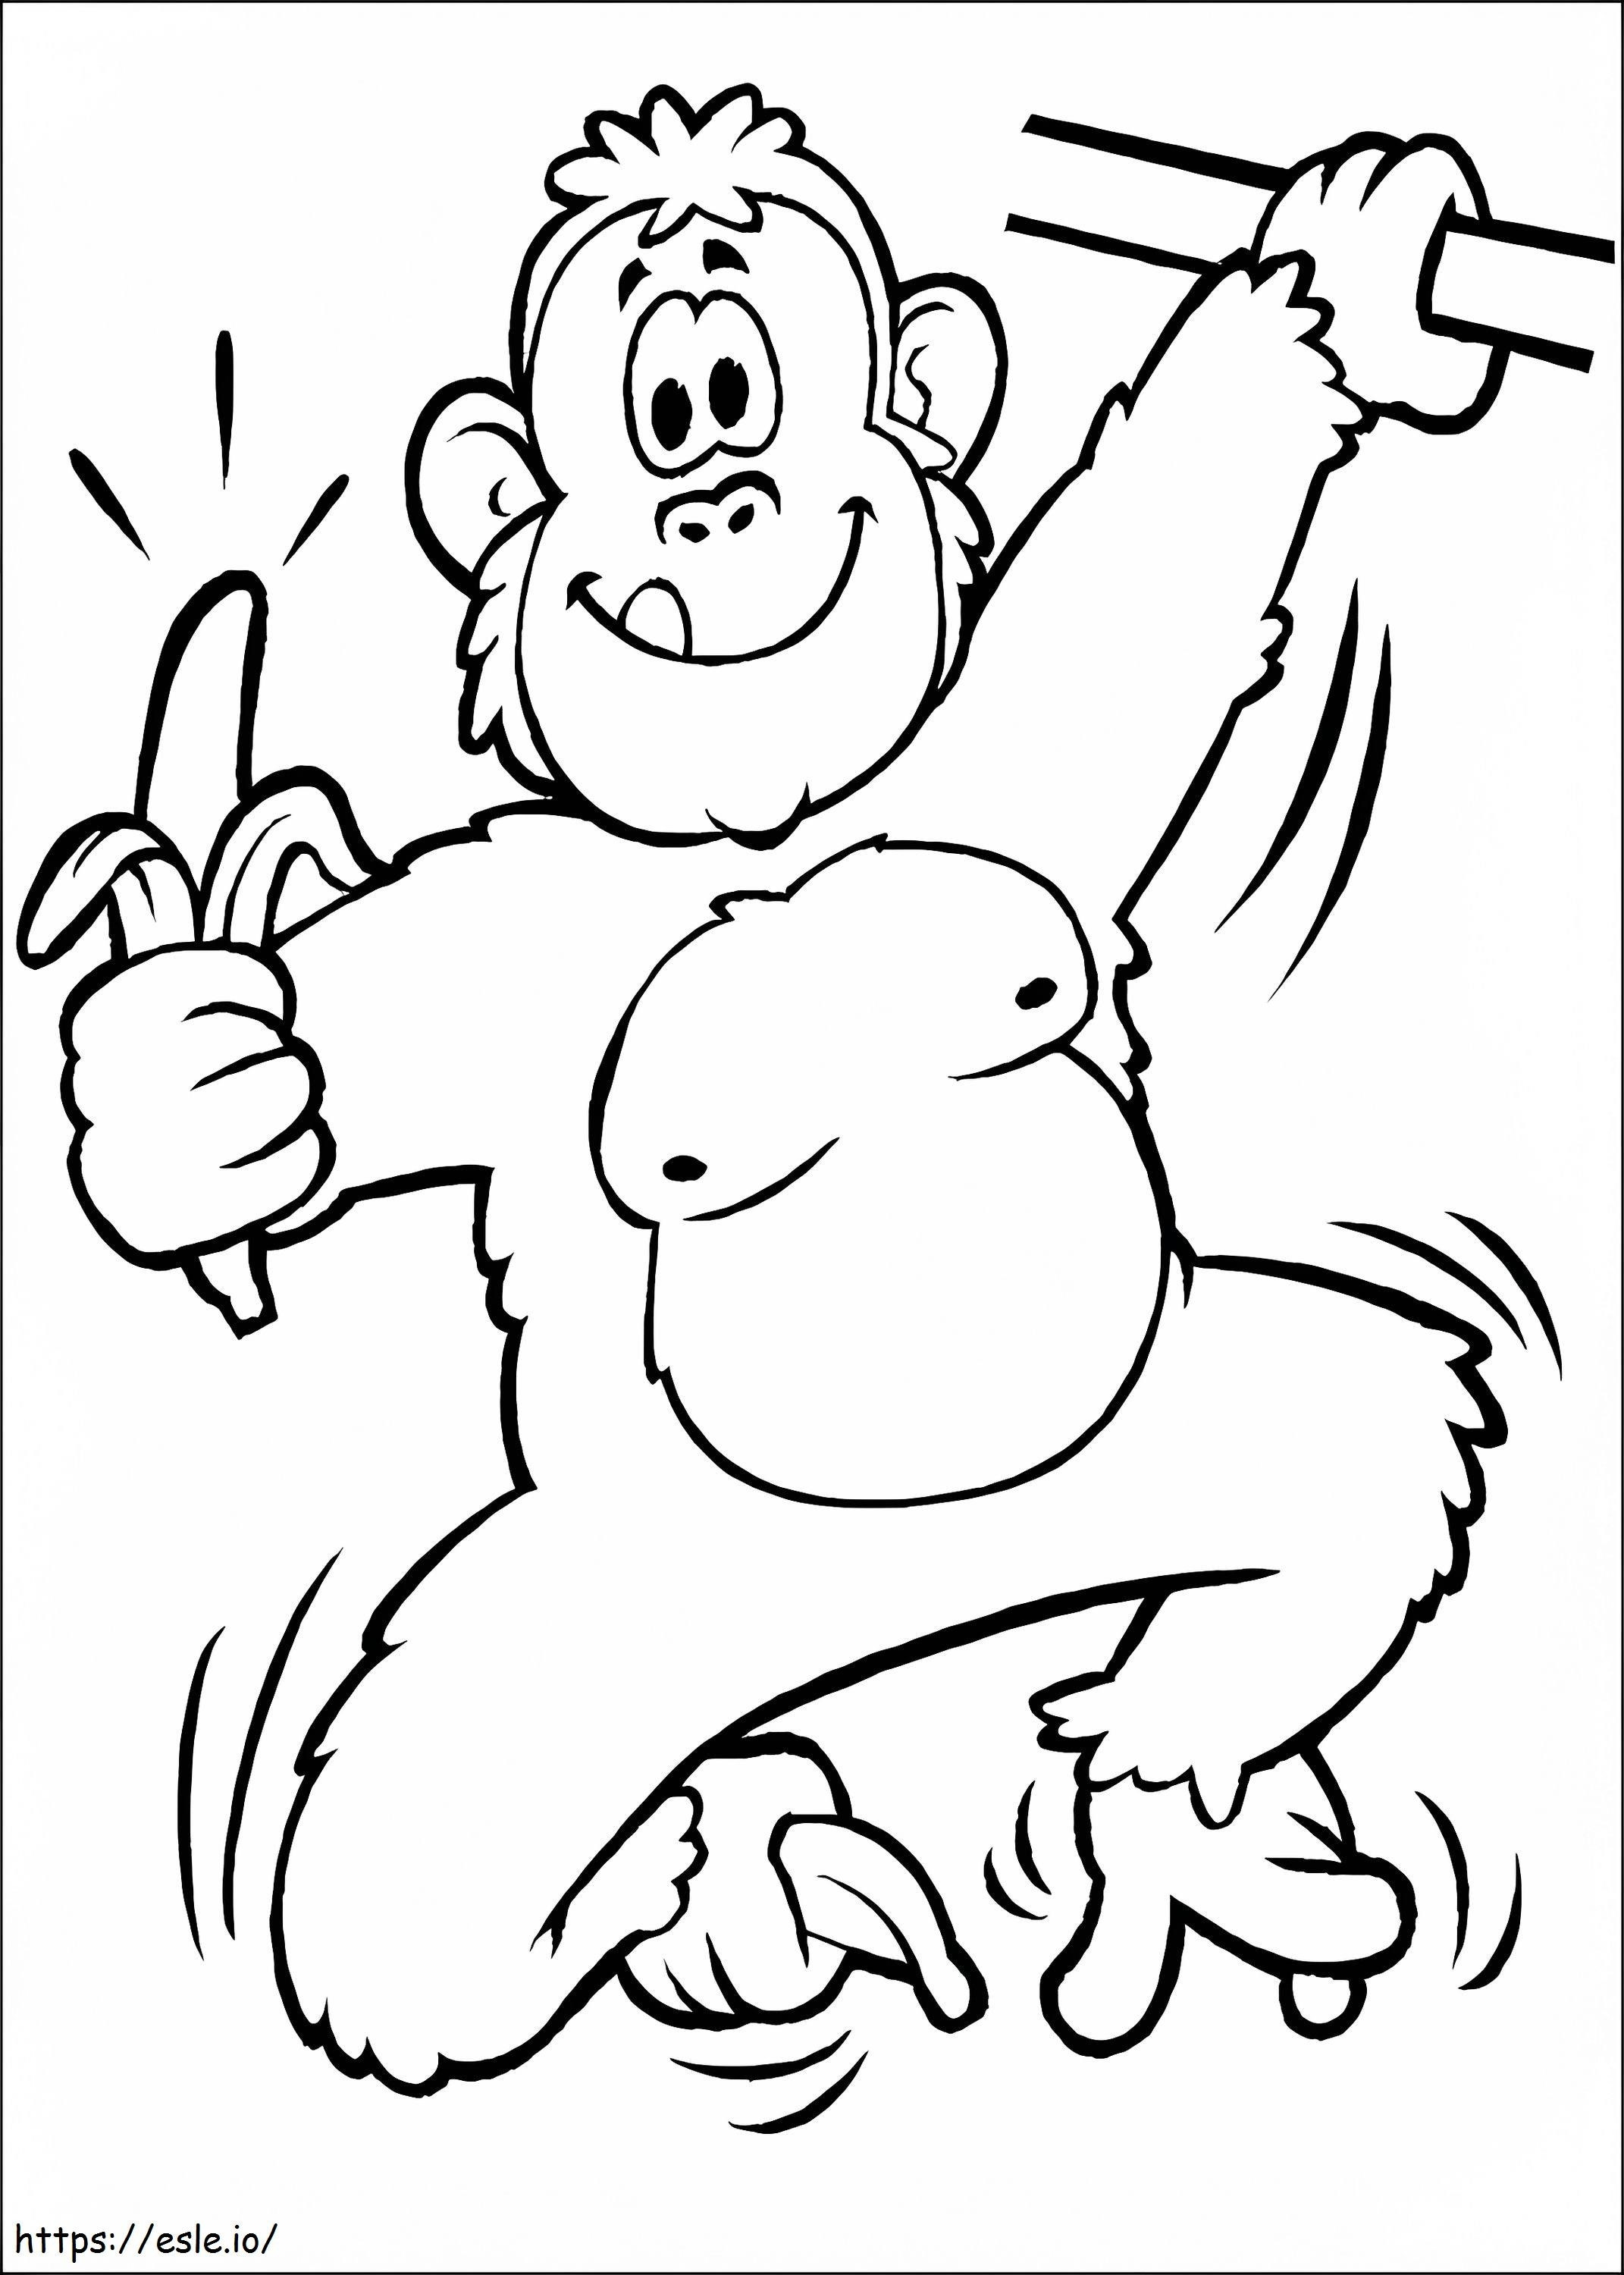 Coloriage rigolote, singe, tenue, banane à imprimer dessin